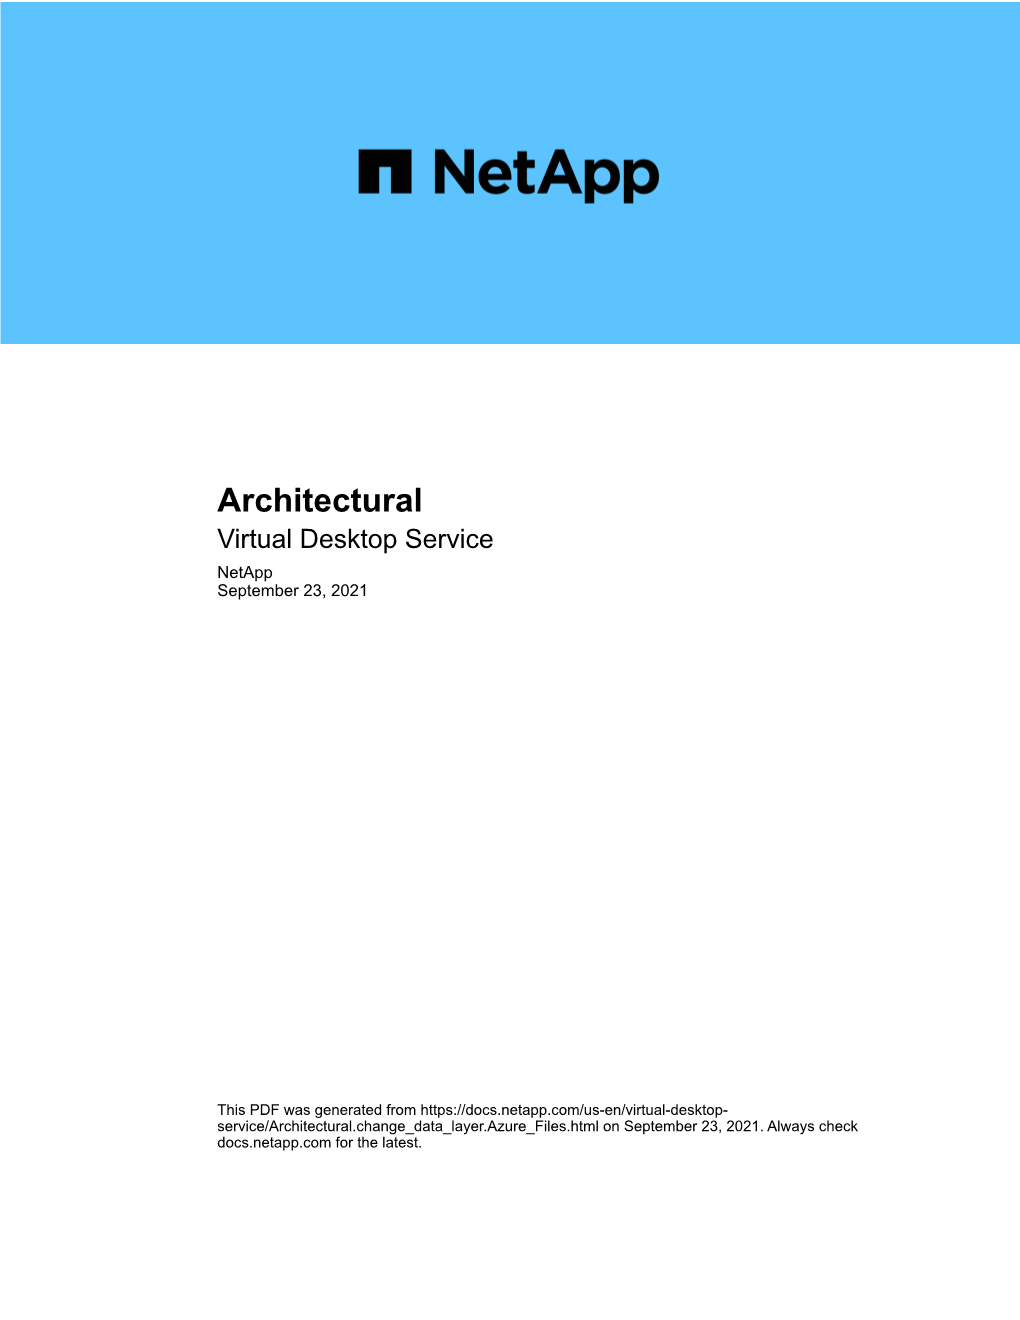 Architectural : Virtual Desktop Service